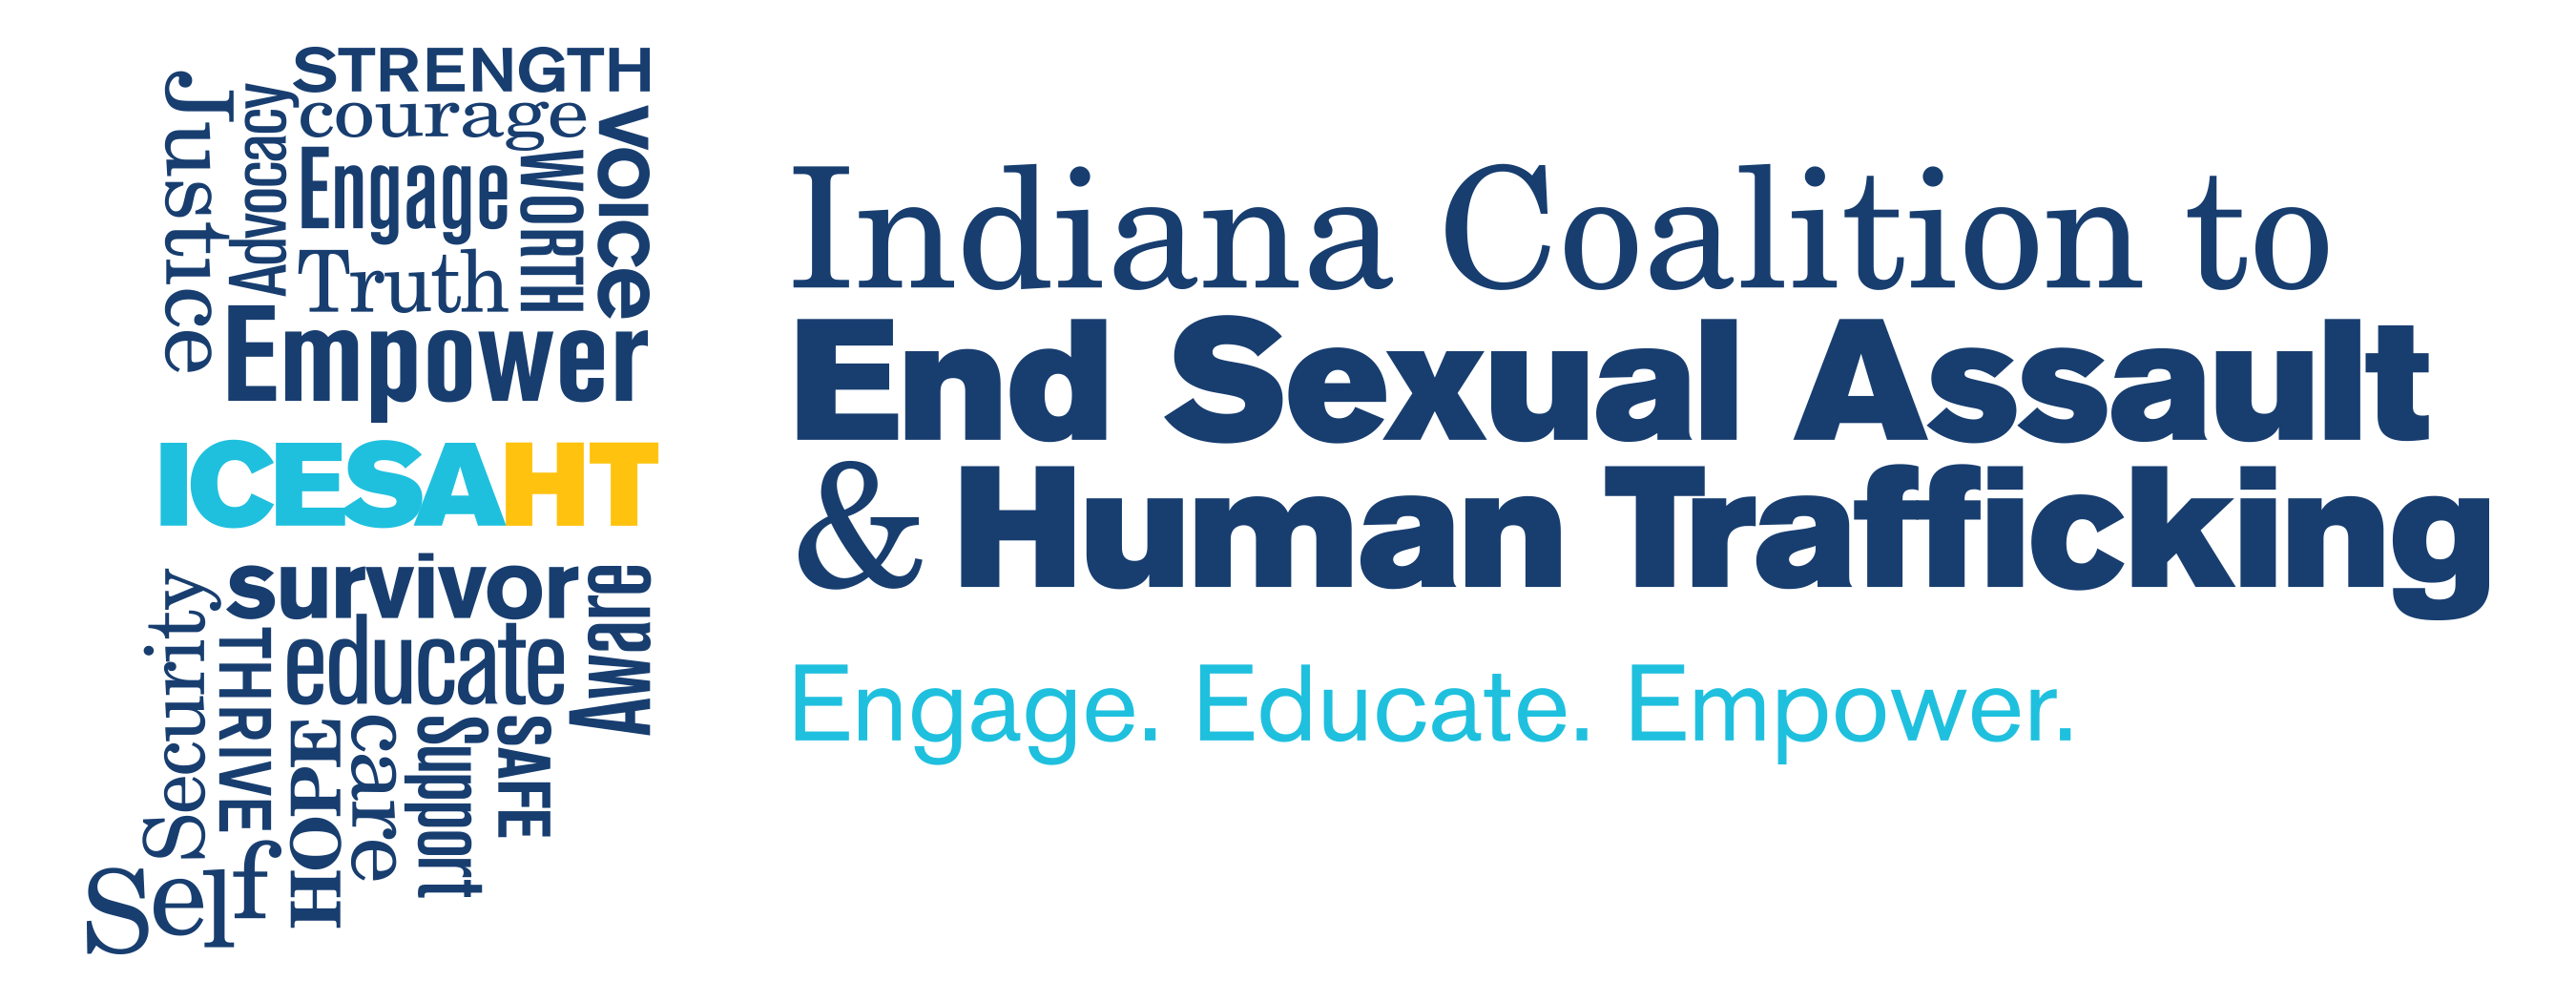 Indiana Coalition